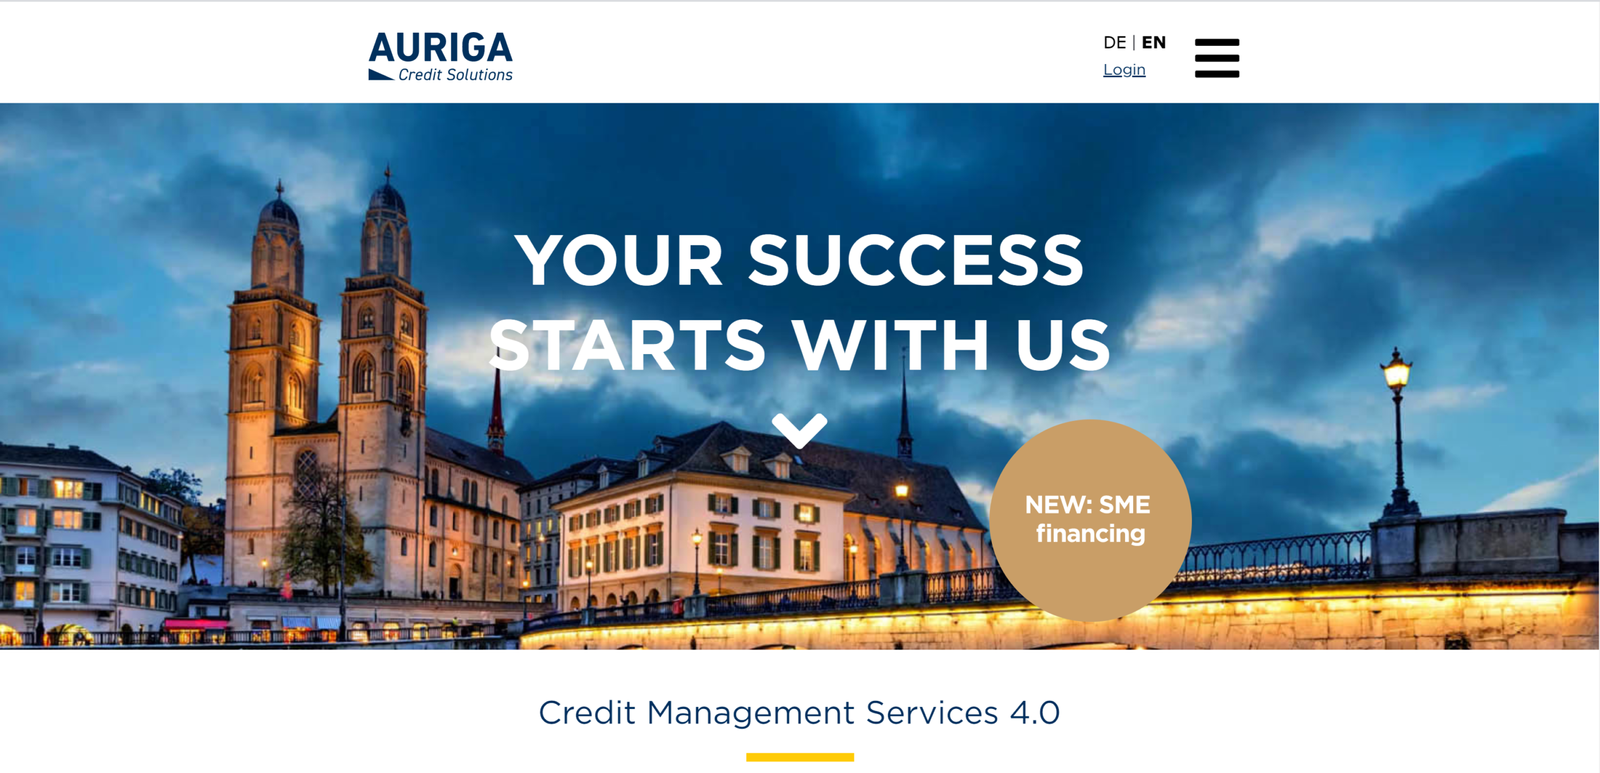 Auriga Usa Login, Bill Payment & Customer Support Information